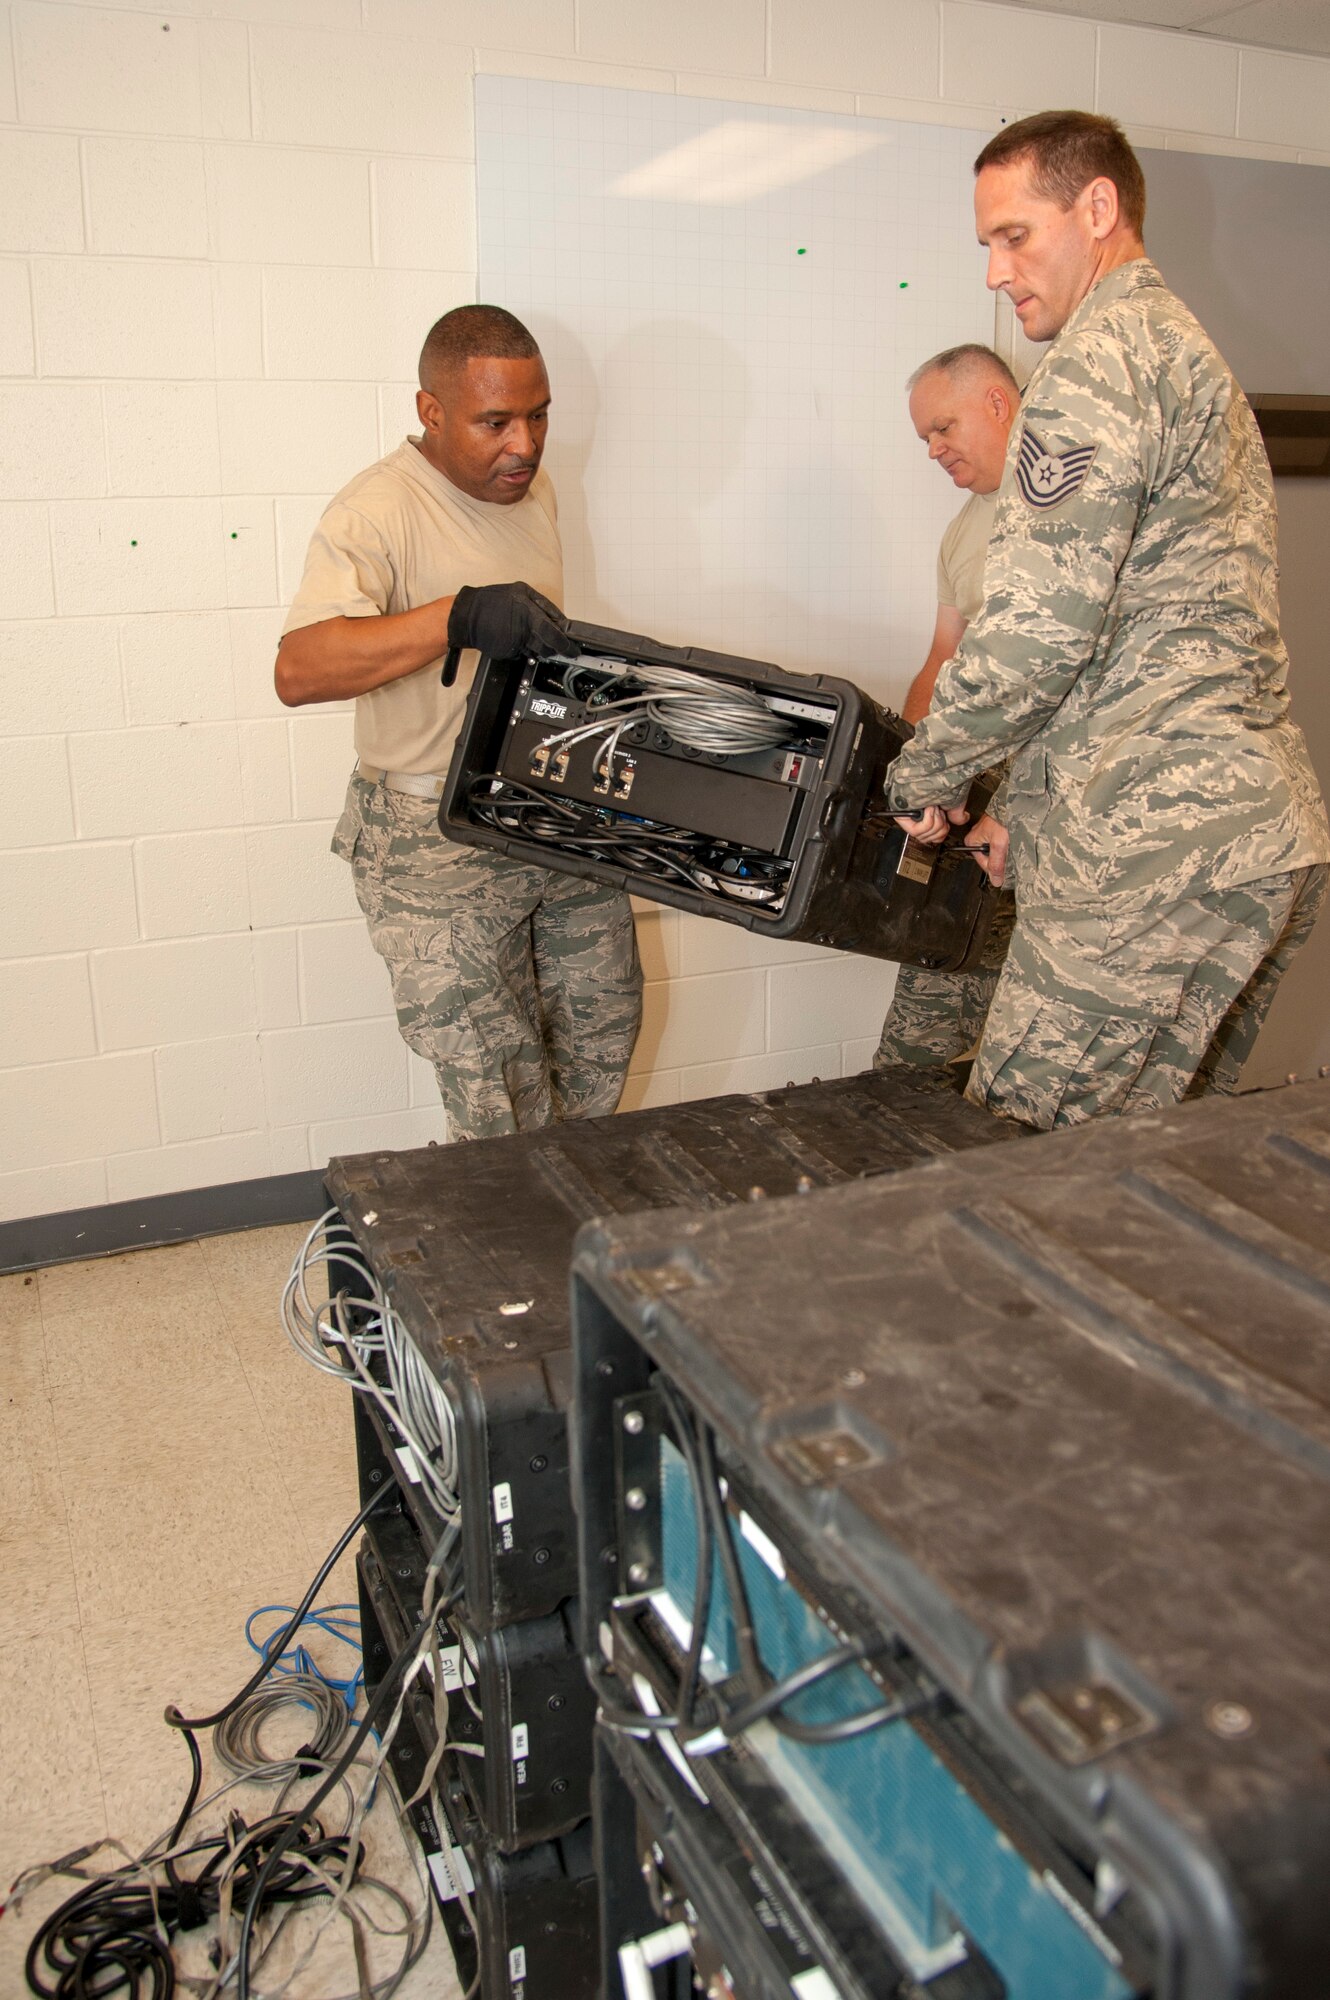 Airmen perform operational checks on equipment.